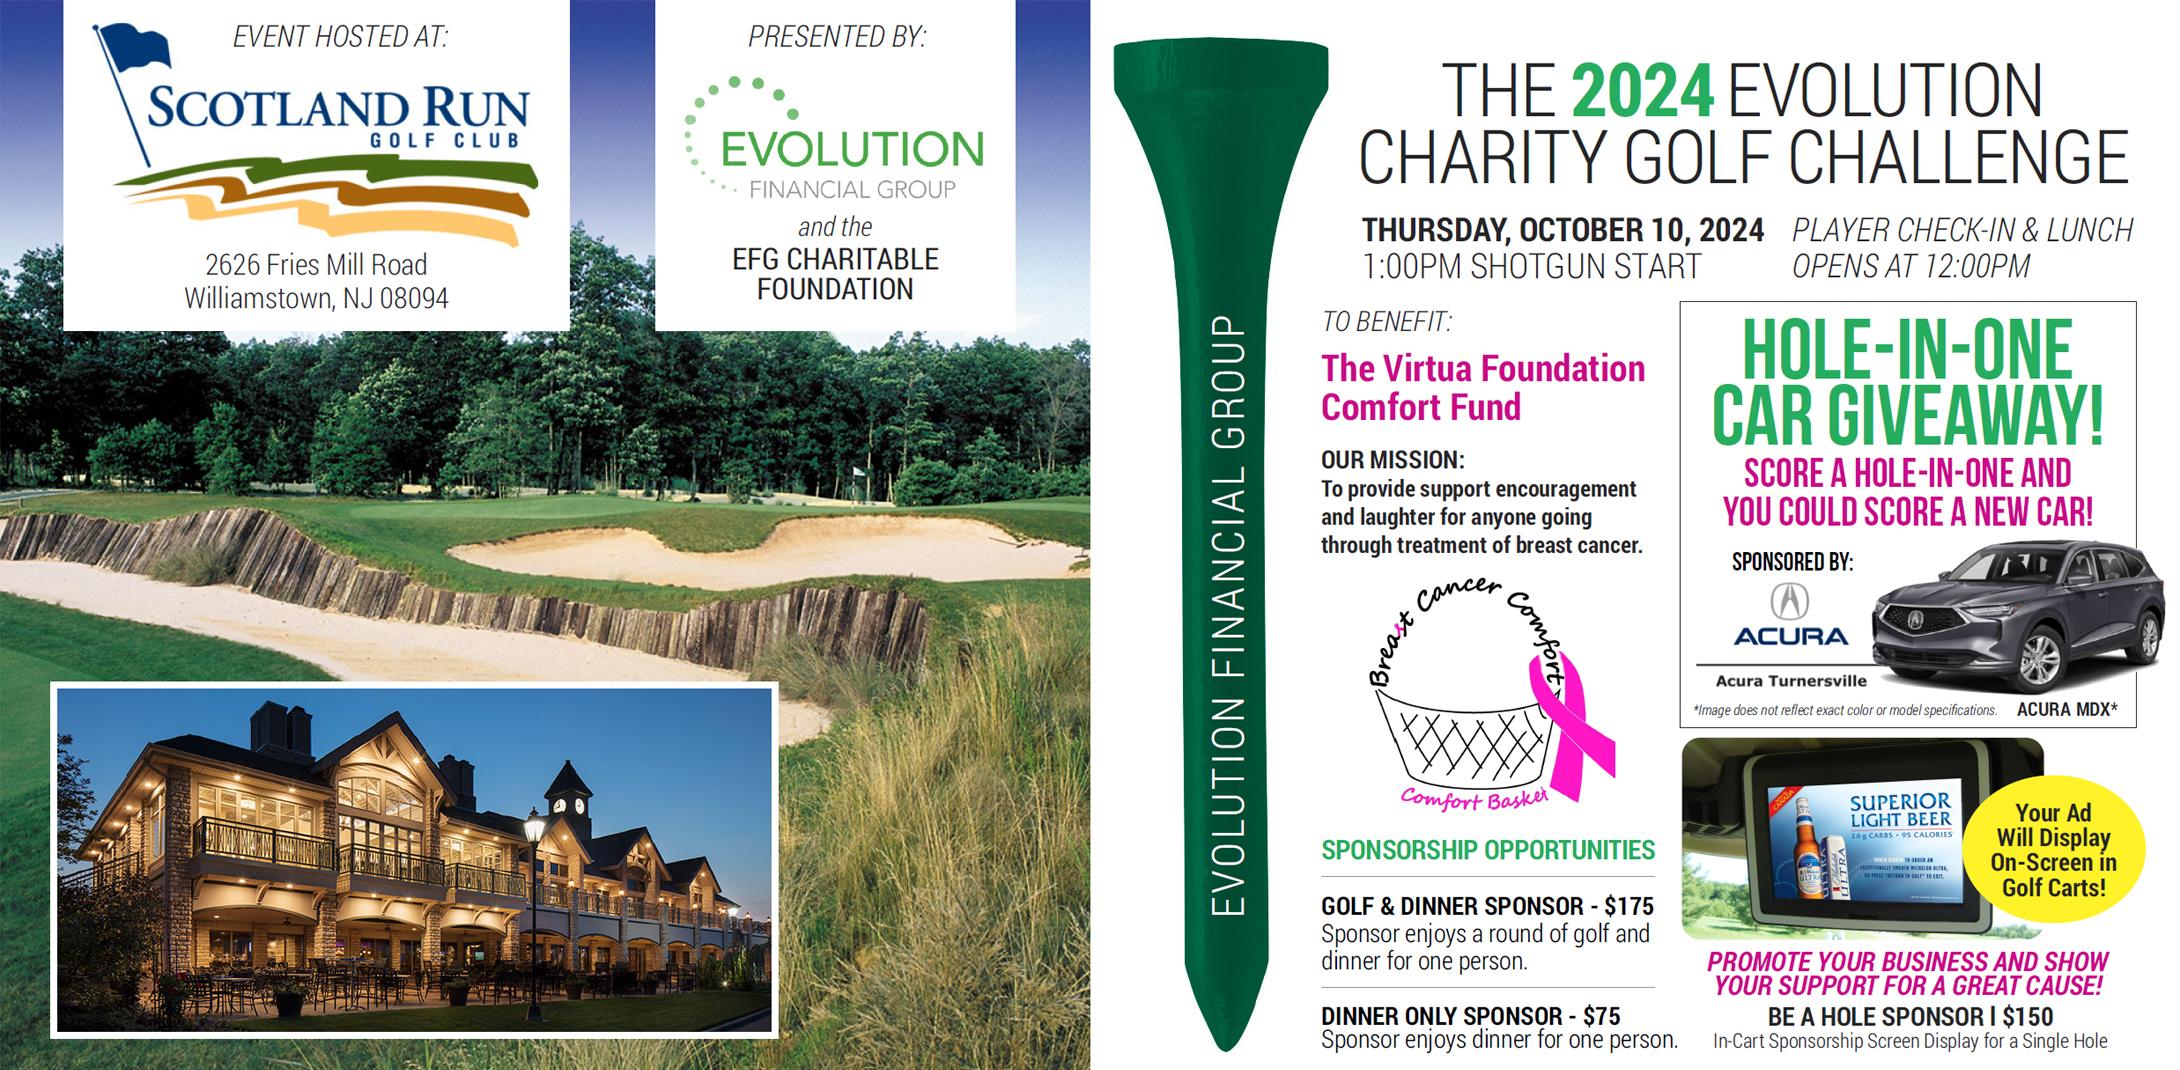 The 2024 Evolution Charity Golf Challenge